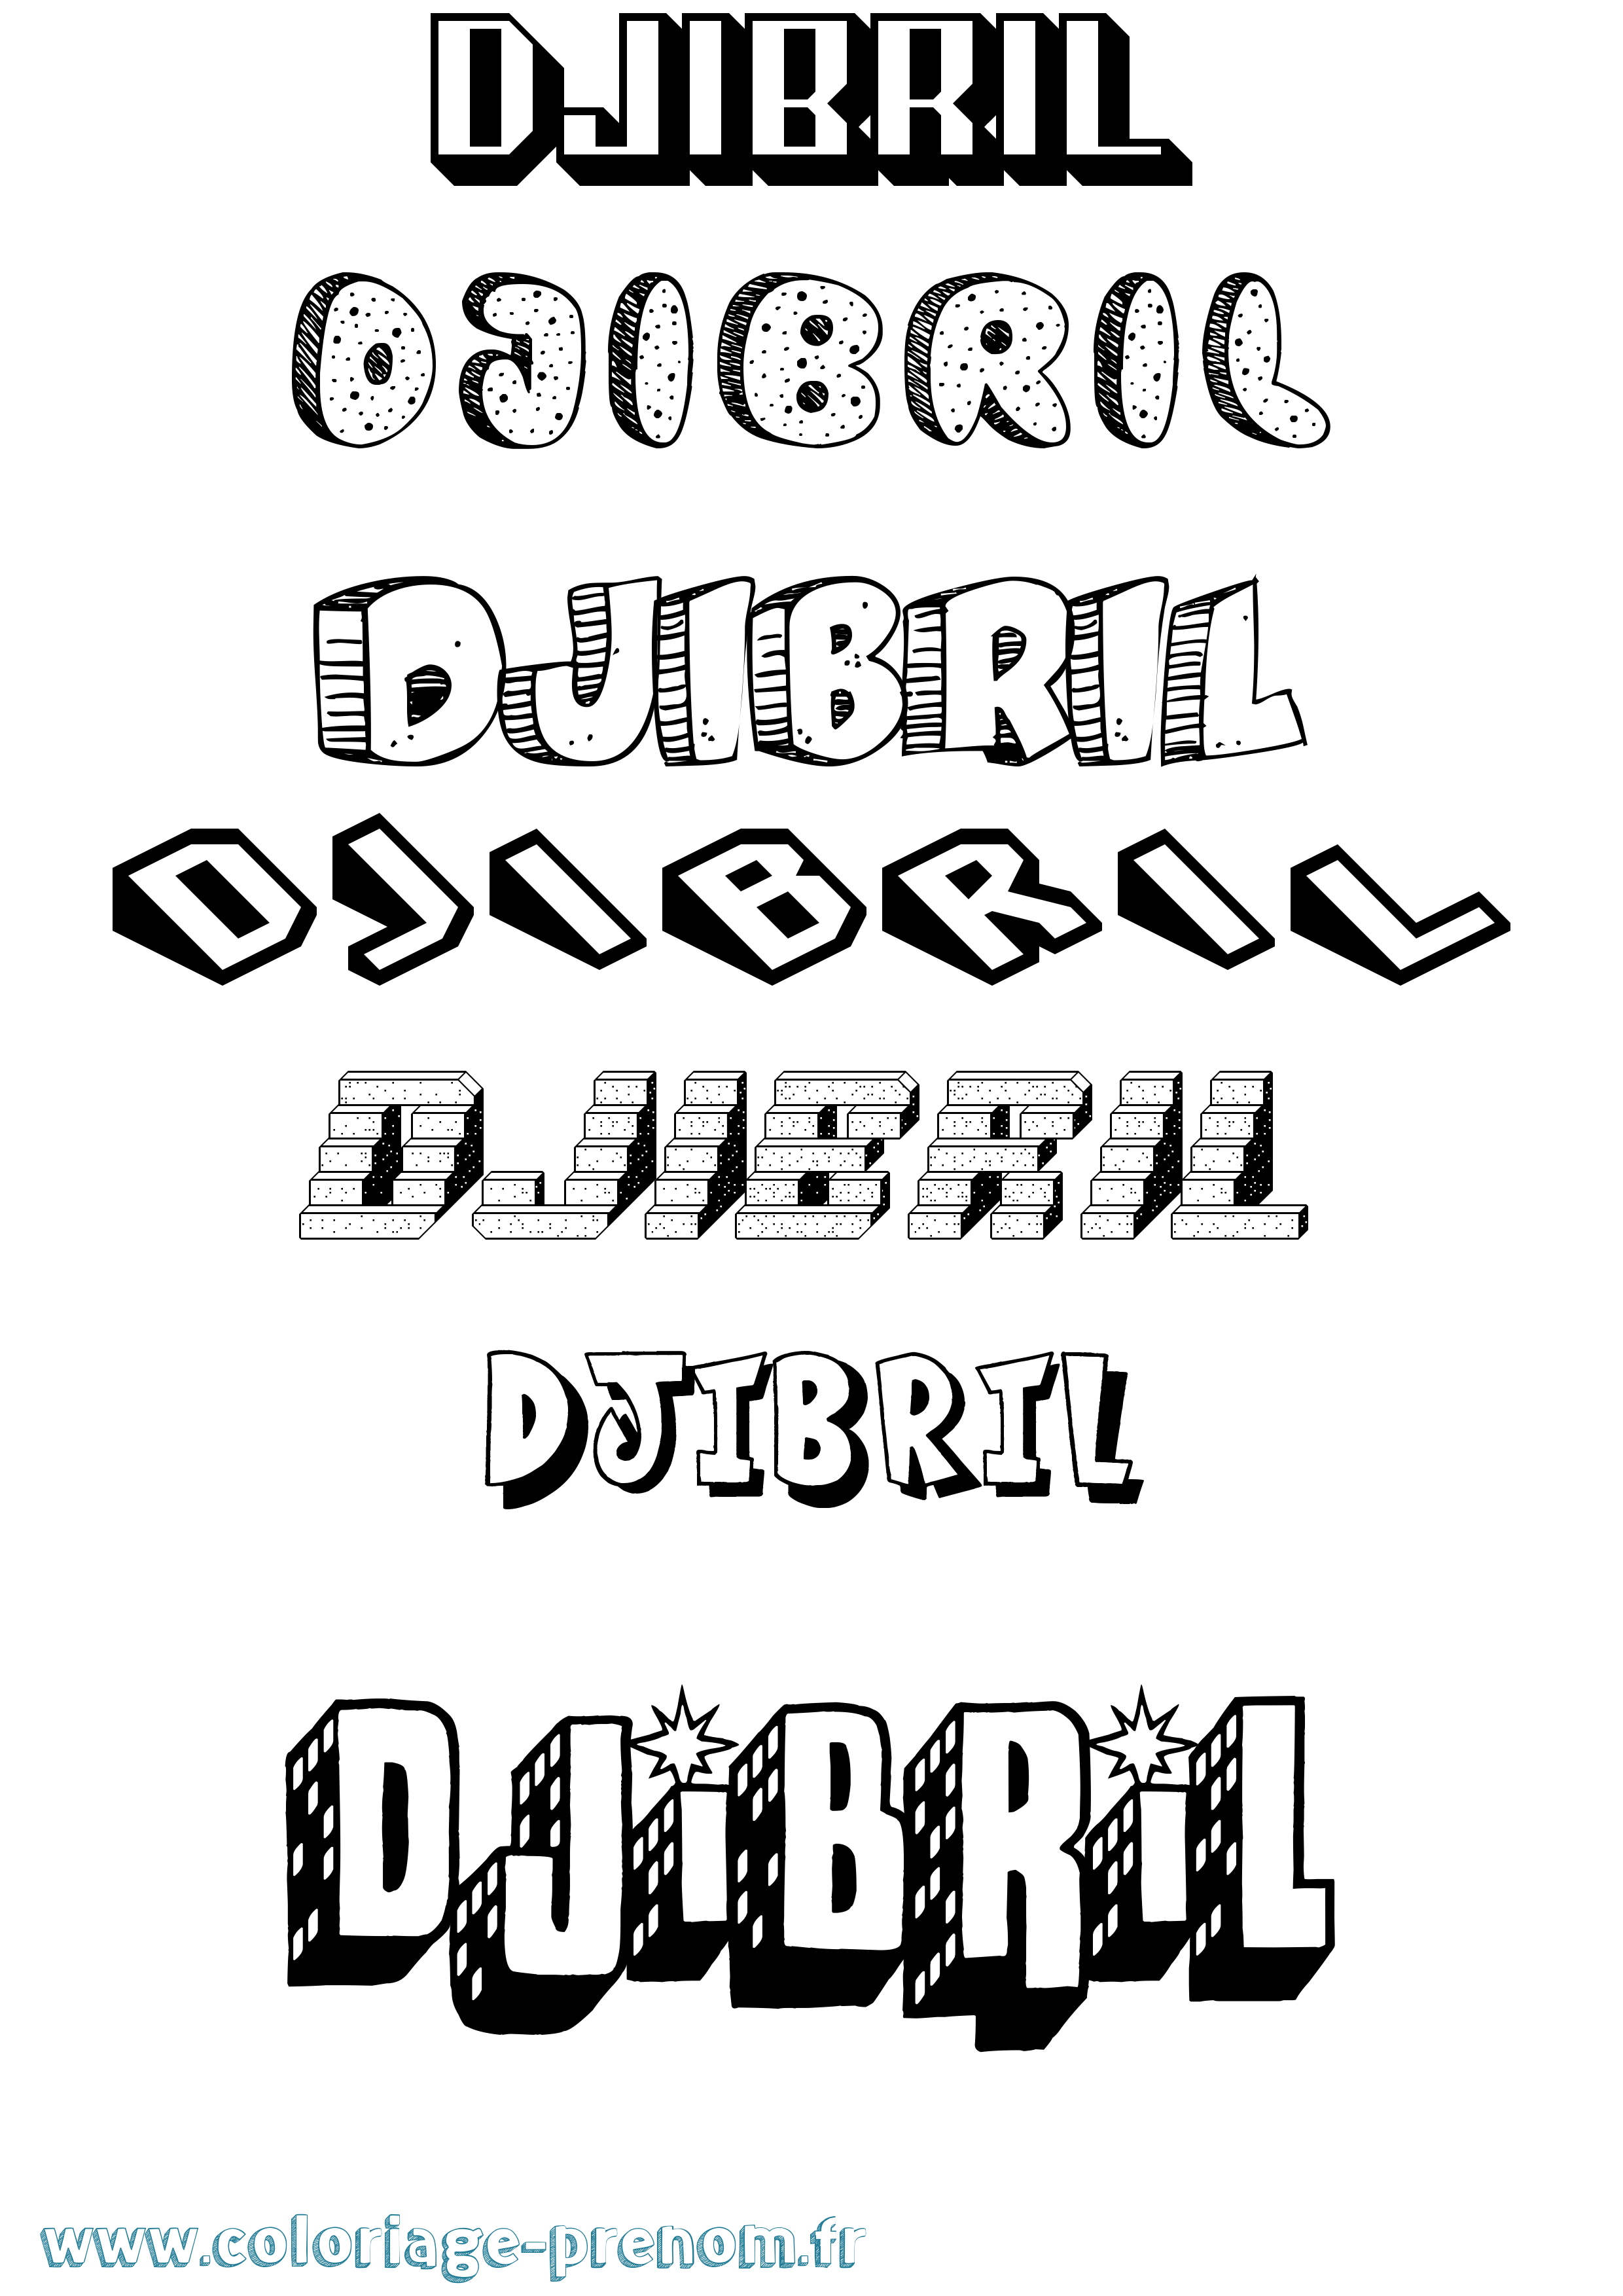 Coloriage prénom Djibril